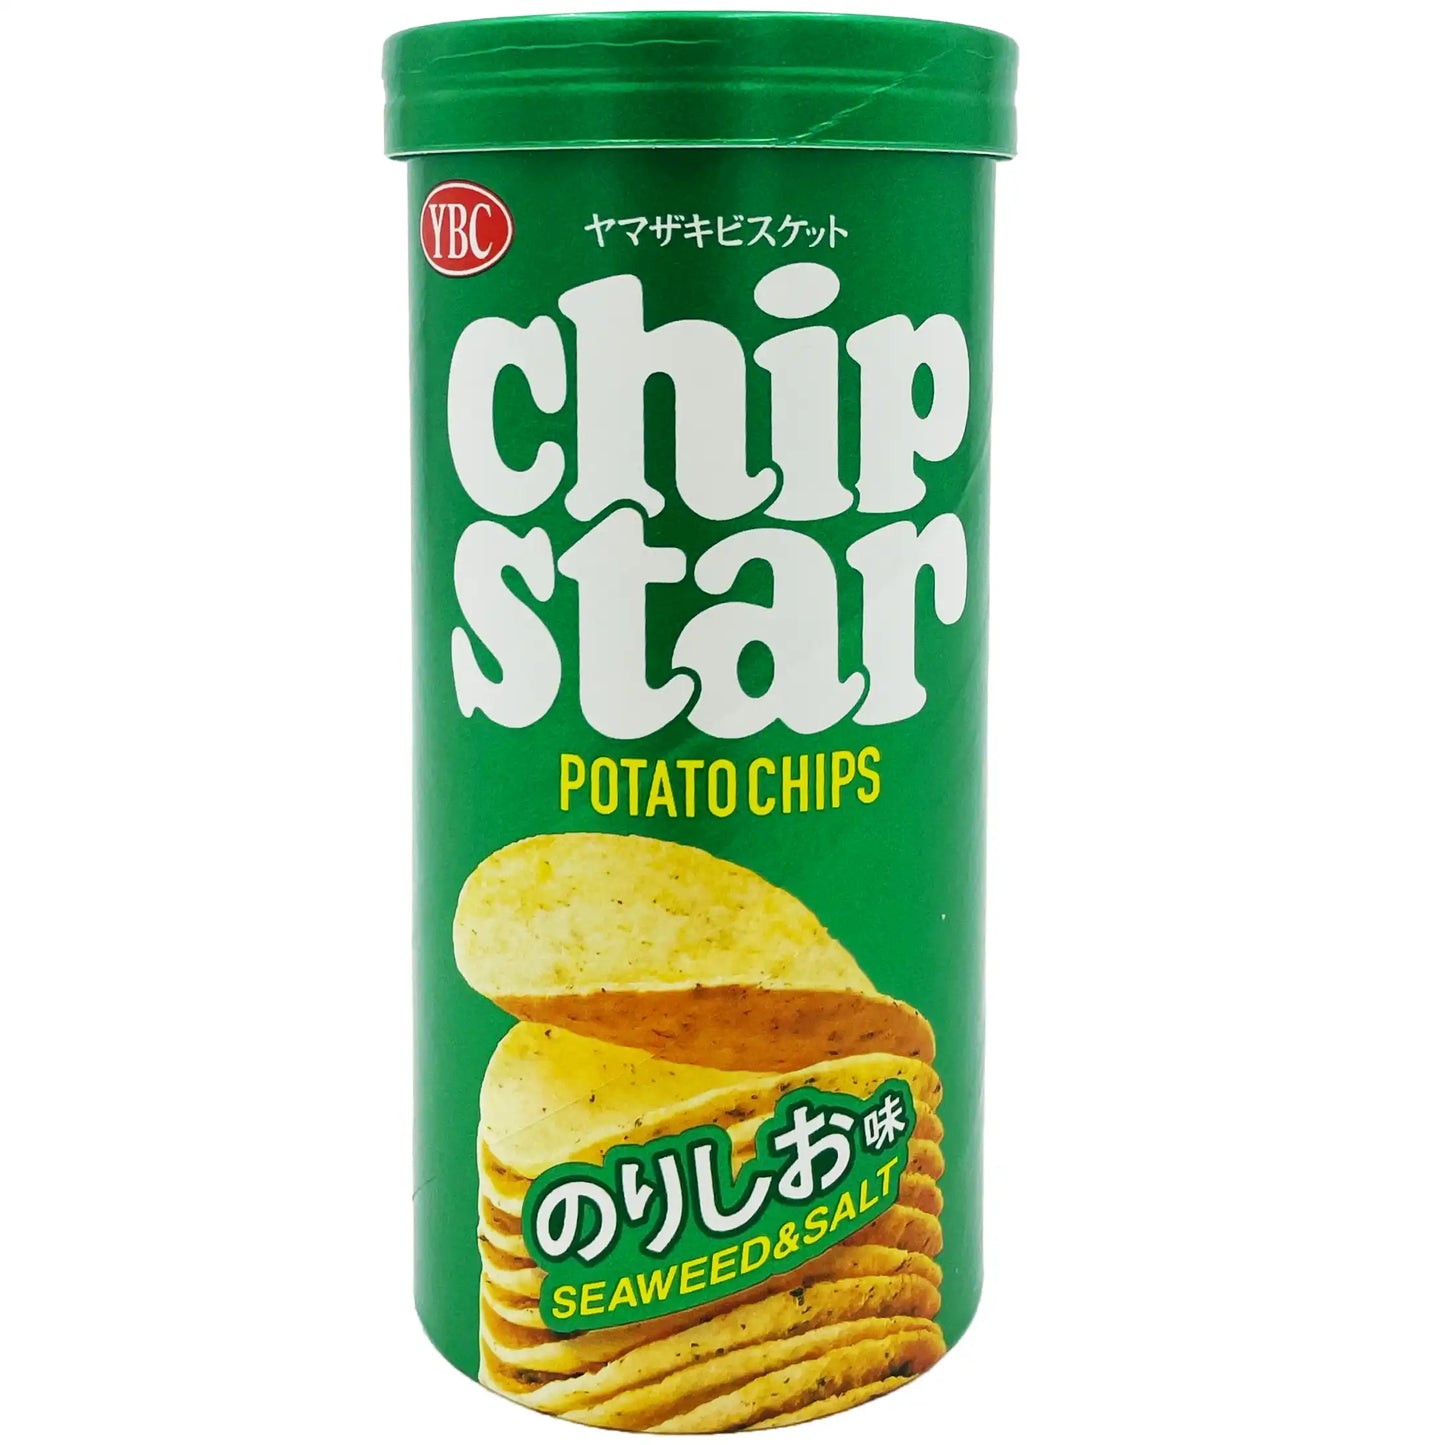 YBC Chip Star Potato Chips, Seaweed & Salt Flavor 1.59 oz